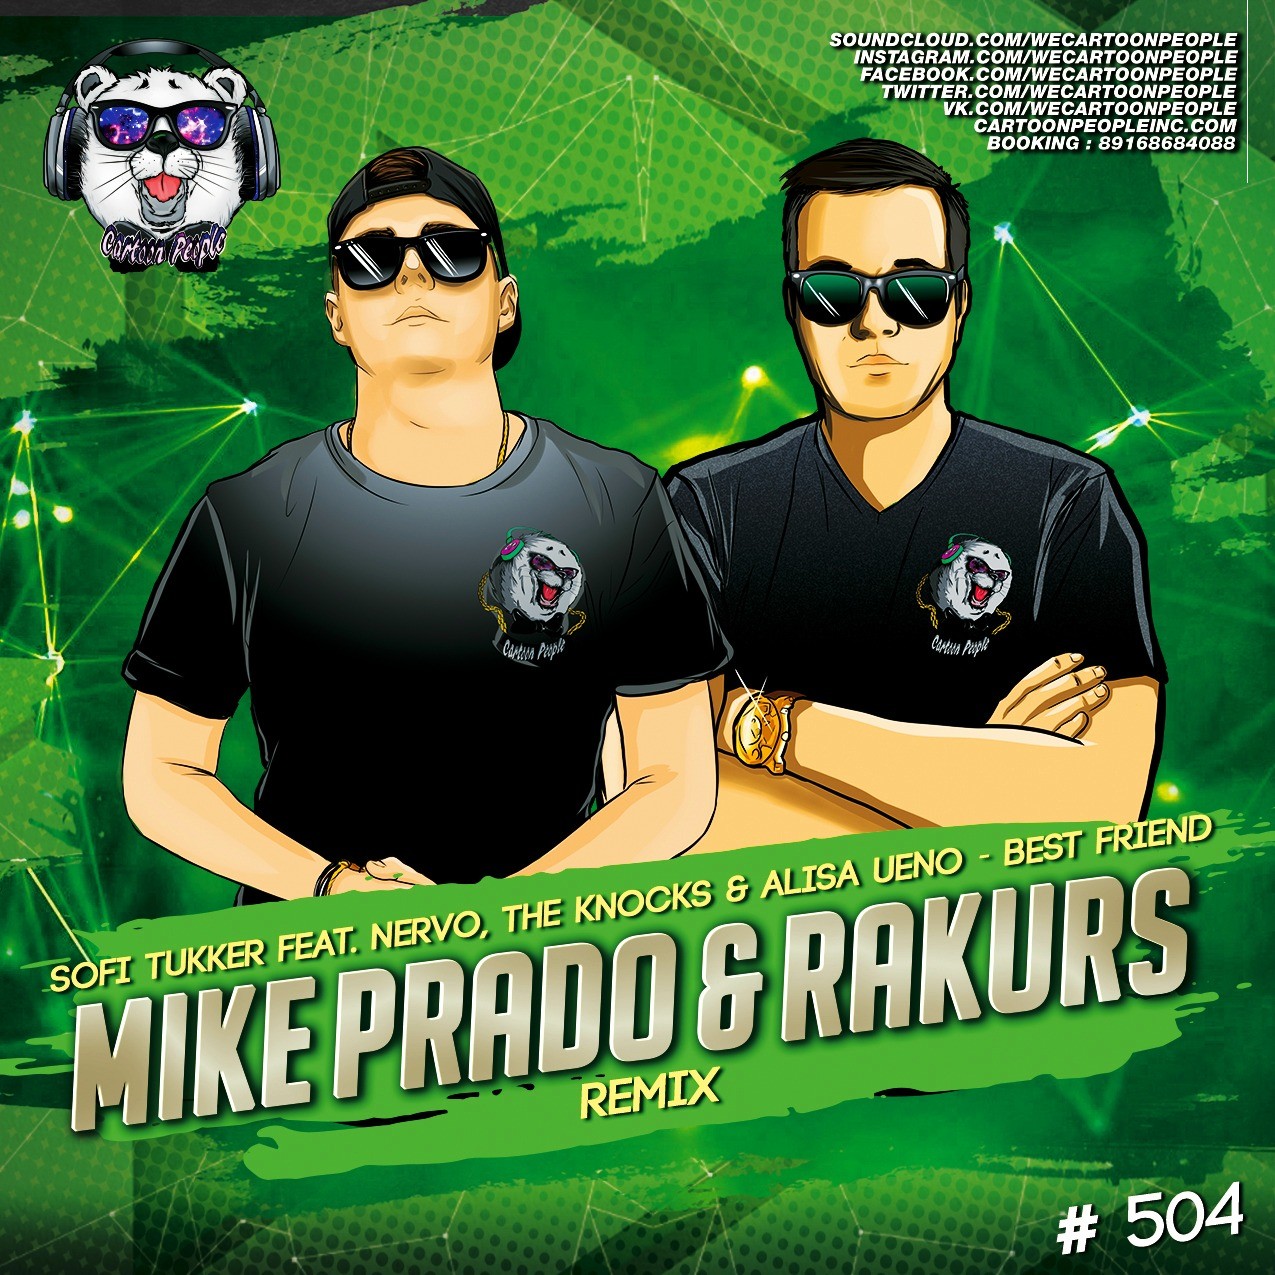 Sofi Tukker feat. NERVO, The Knocks & Alisa Ueno - Best Friend (Mike Prado & Rakurs Radio Edit)